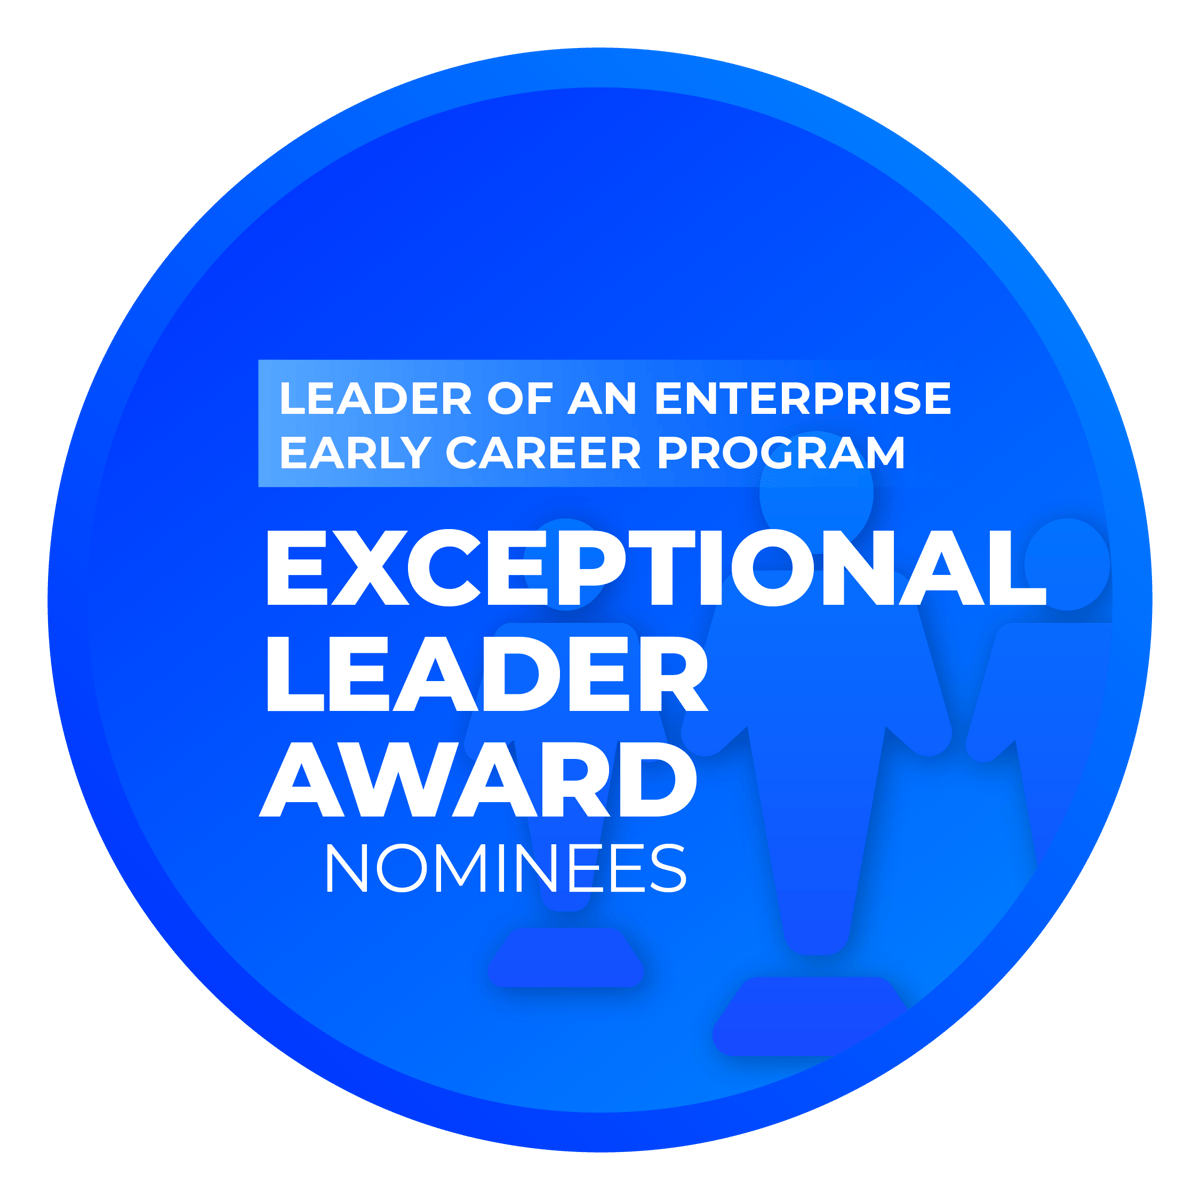 Exceptional Leader Award: Enterprise Early Career Program Nominees